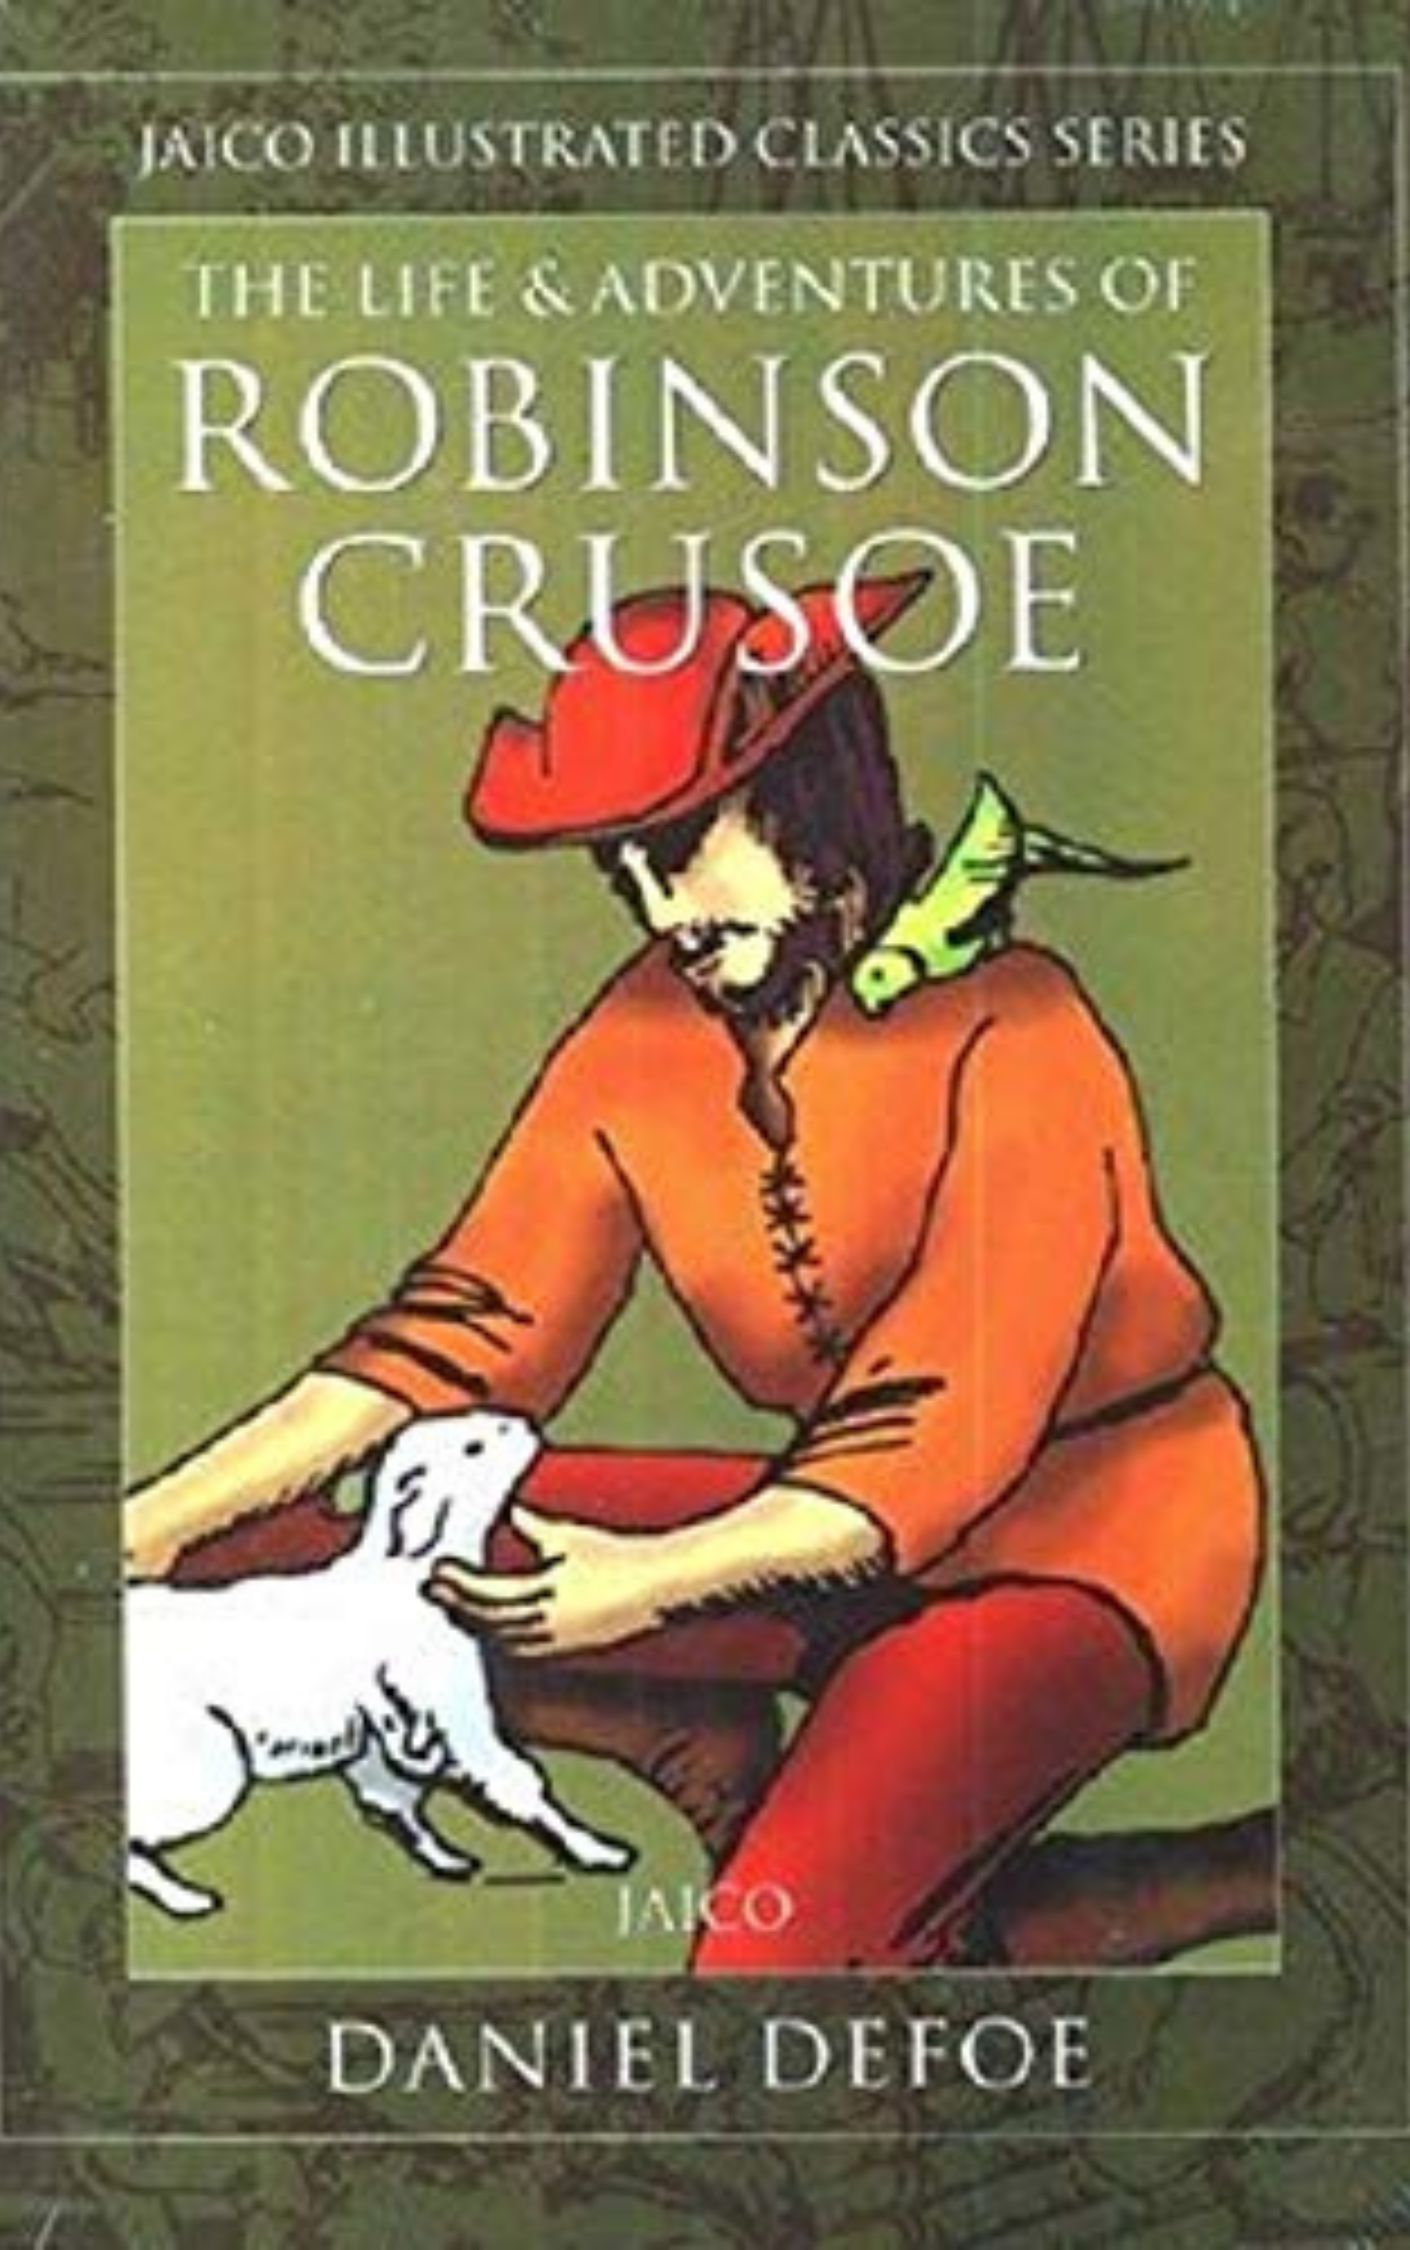 THE LIFE & ADVENTURES OF ROBINSON CRUSOE